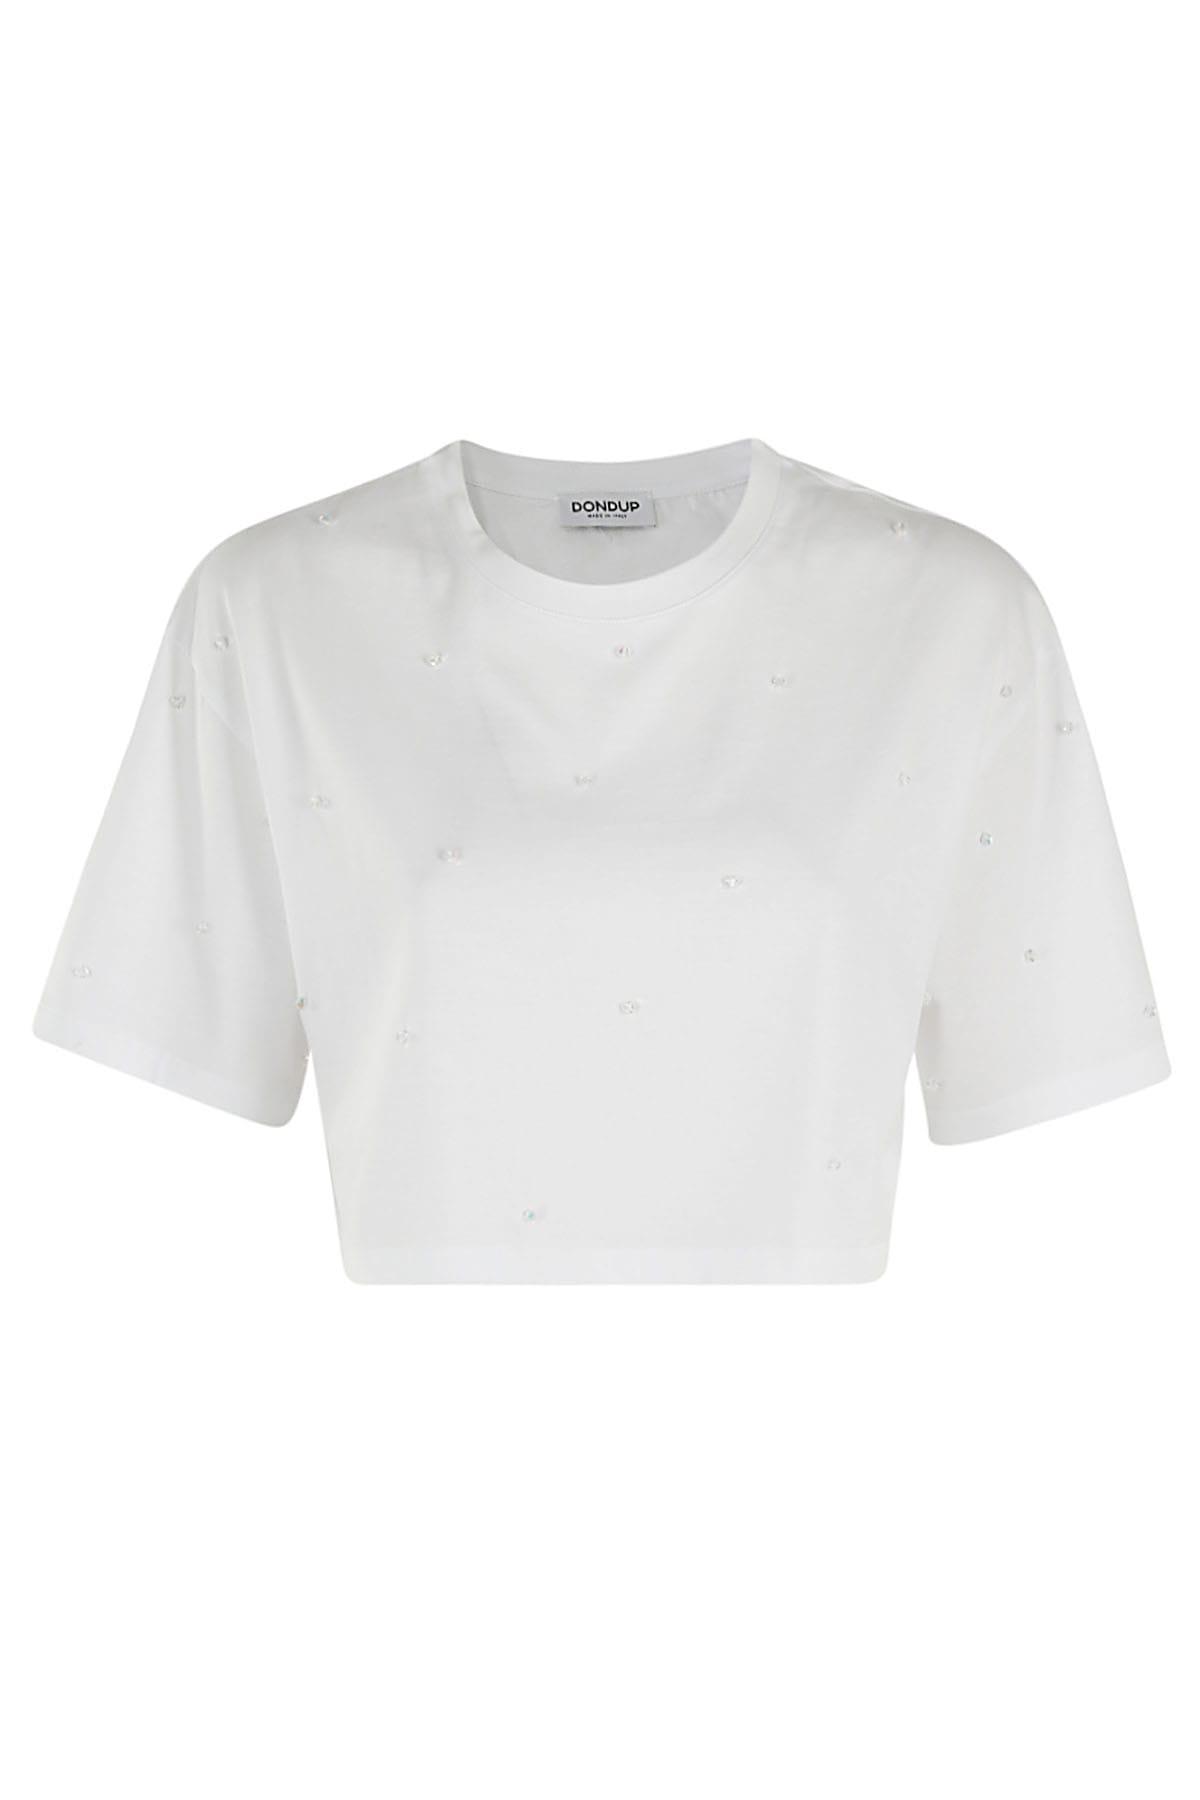 Dondup T Shirt In Bianco